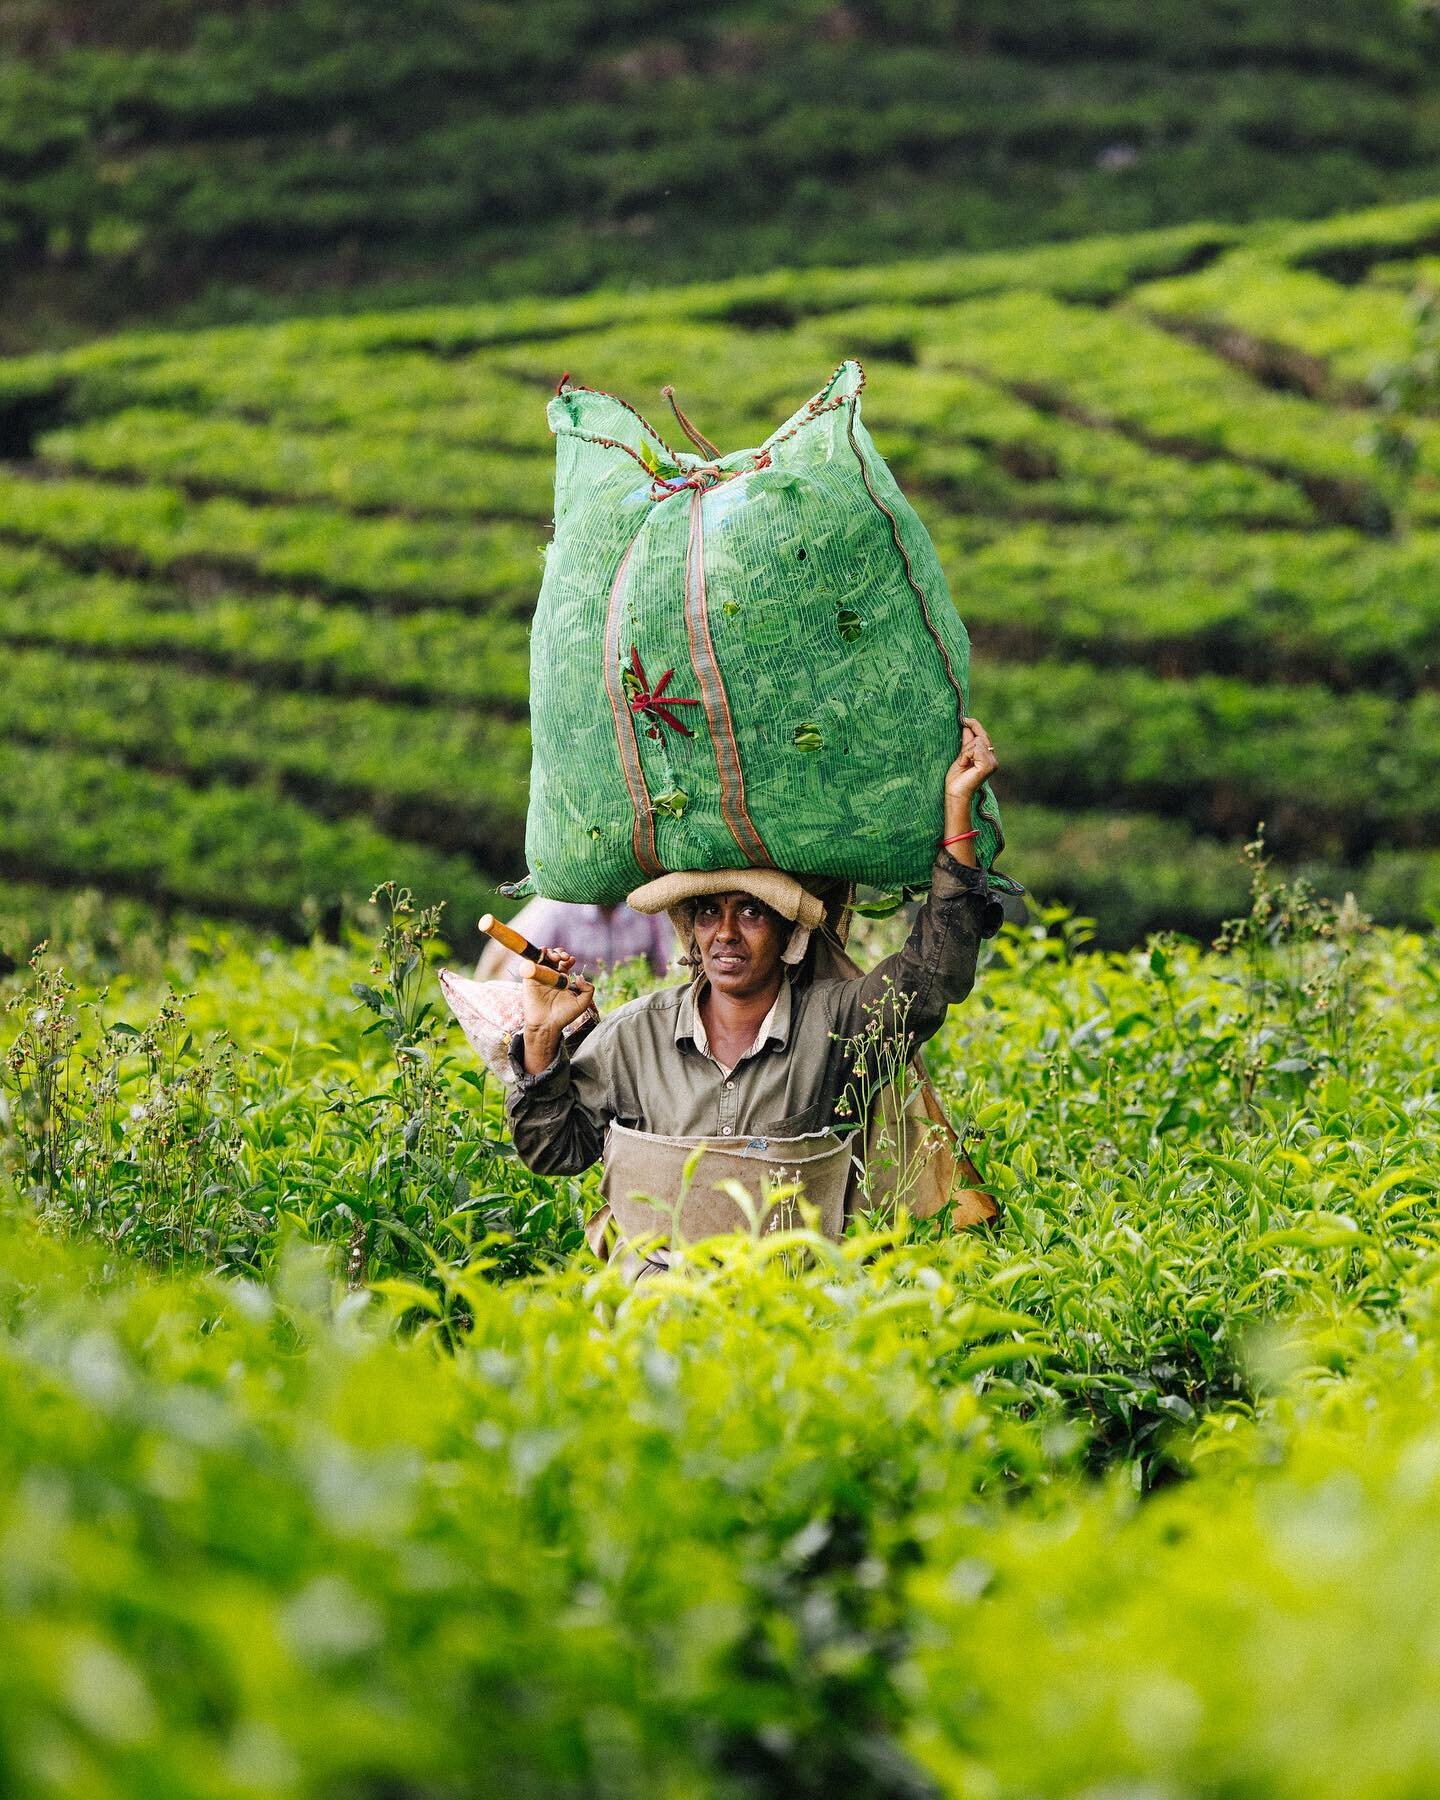 Tea Plantations #canonr5 #kerala #tea #agriculture #travelportrait #rf70200f4lisusm #canonaustralia #portrait #portra800 #misty #landscape #india #indiatravel